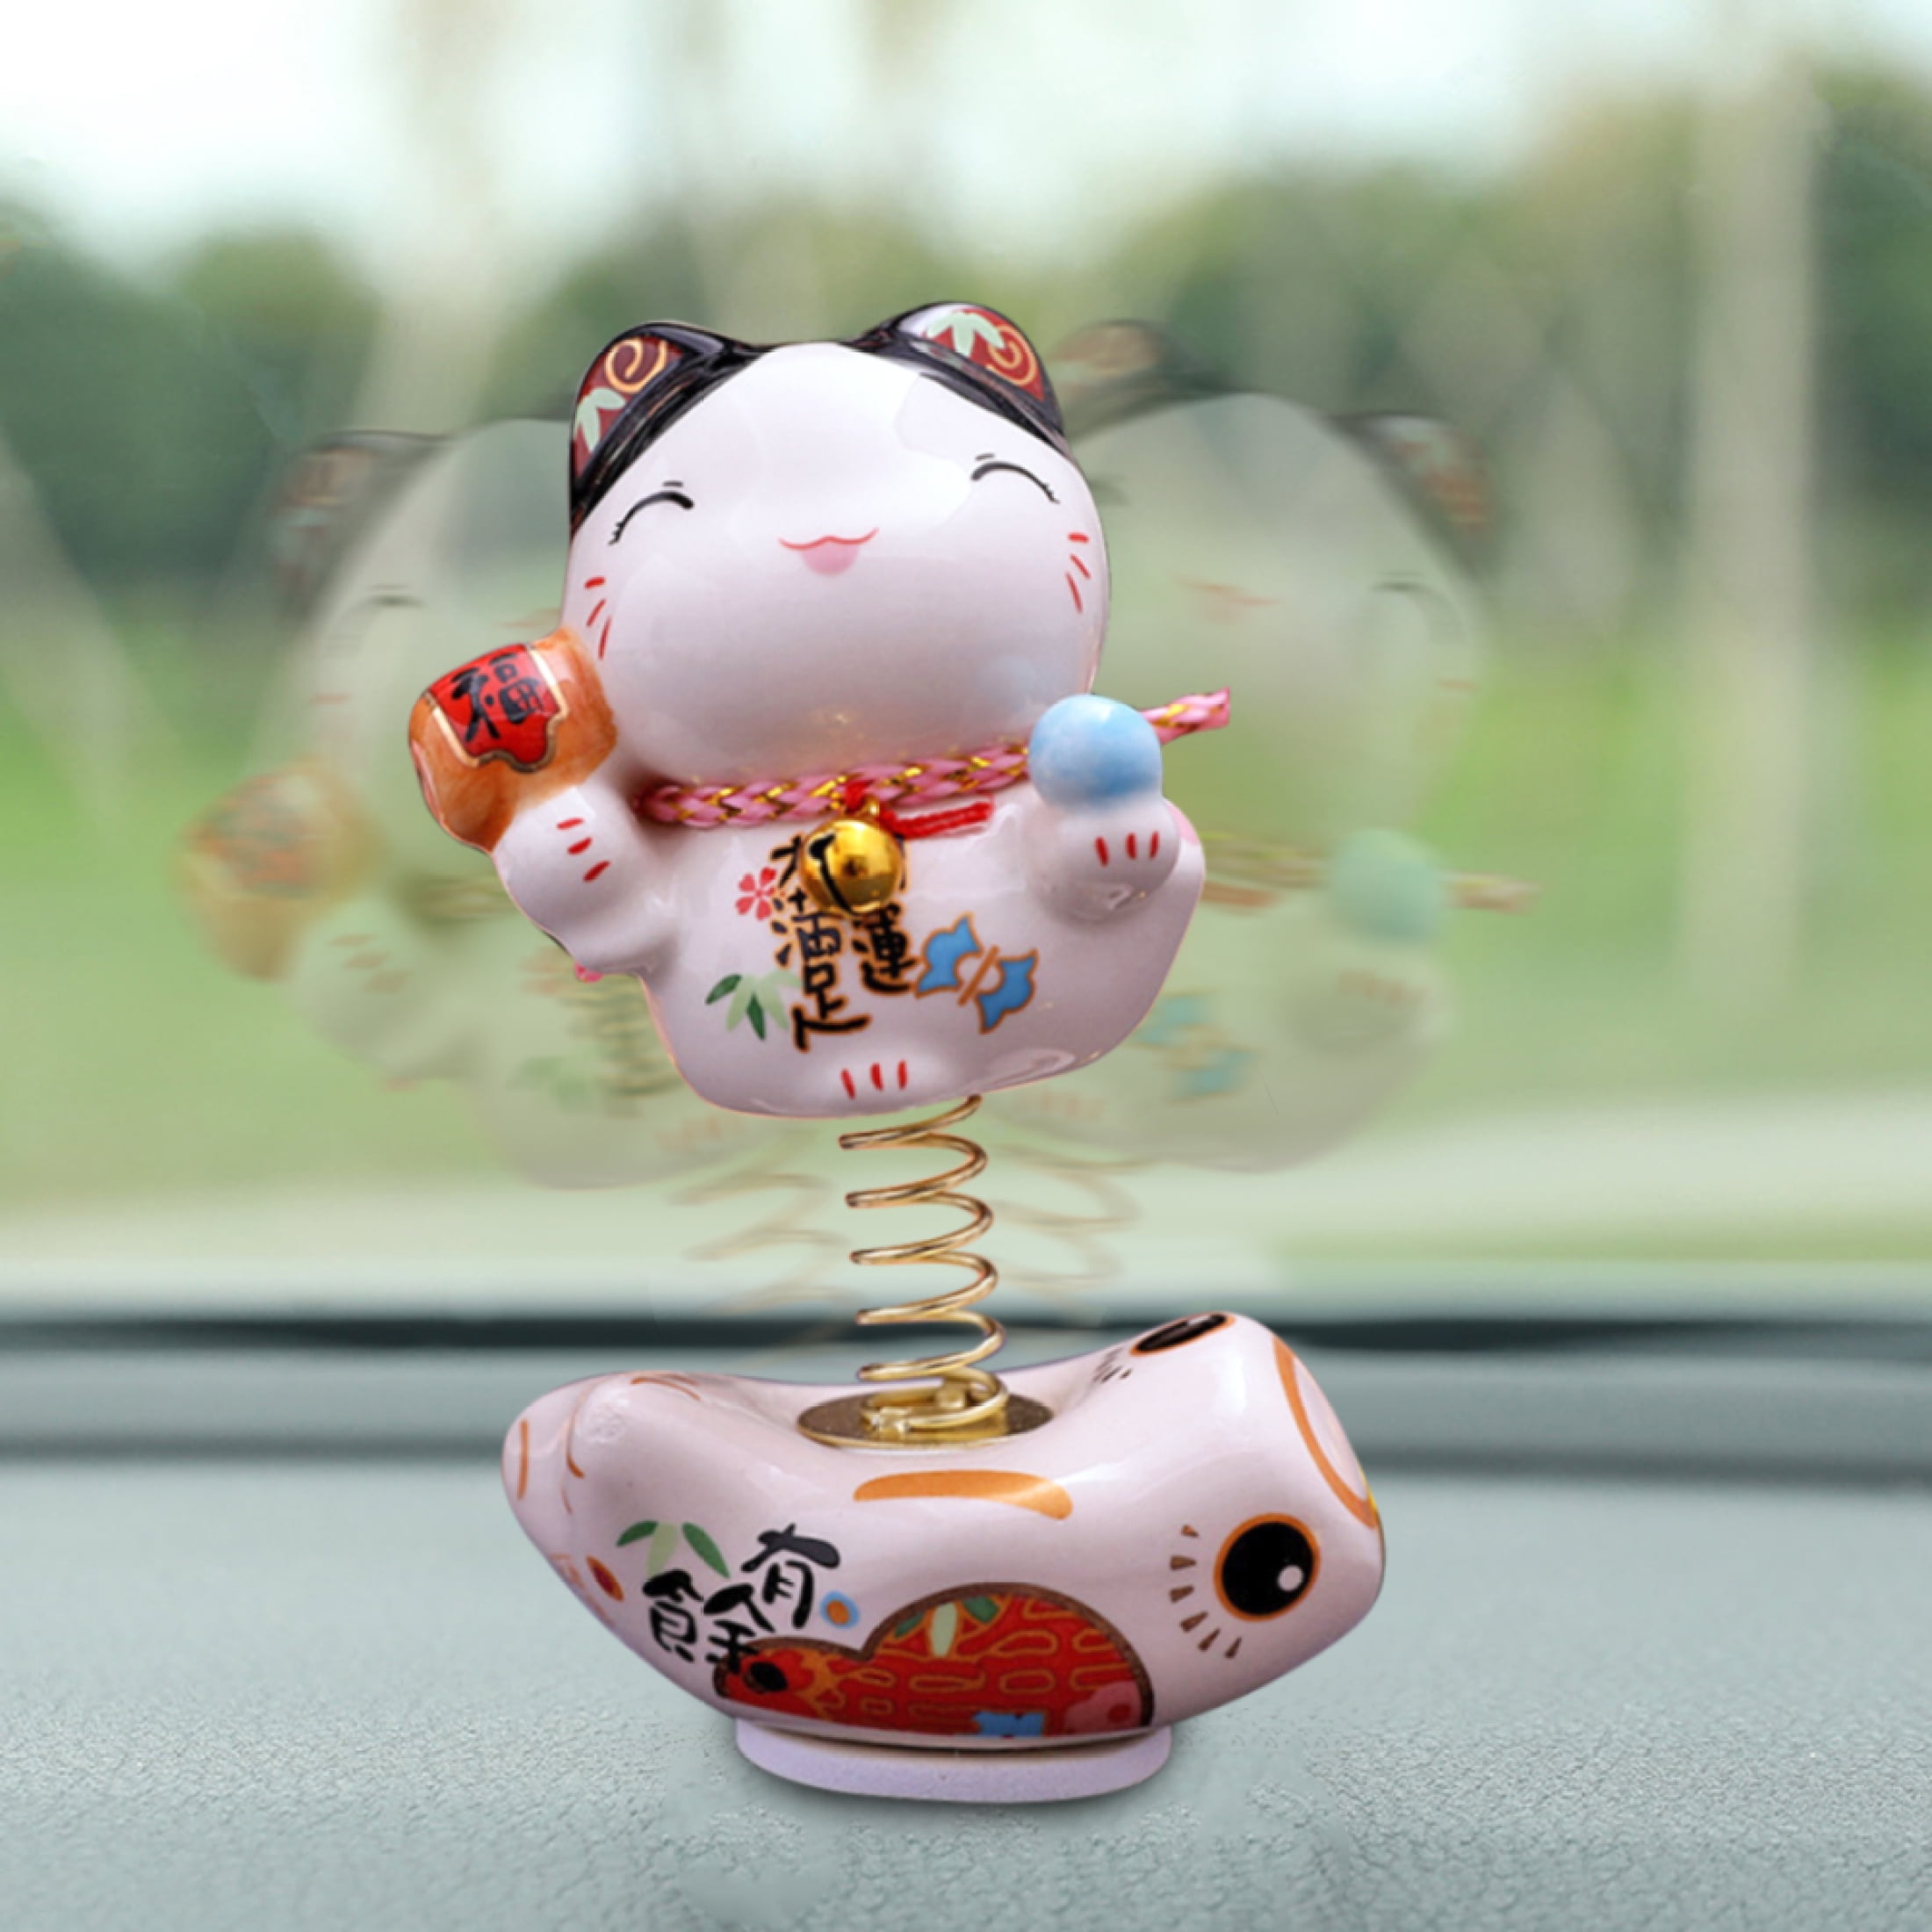  Katutude Car Dashboard Decorations Cute Cat Resin